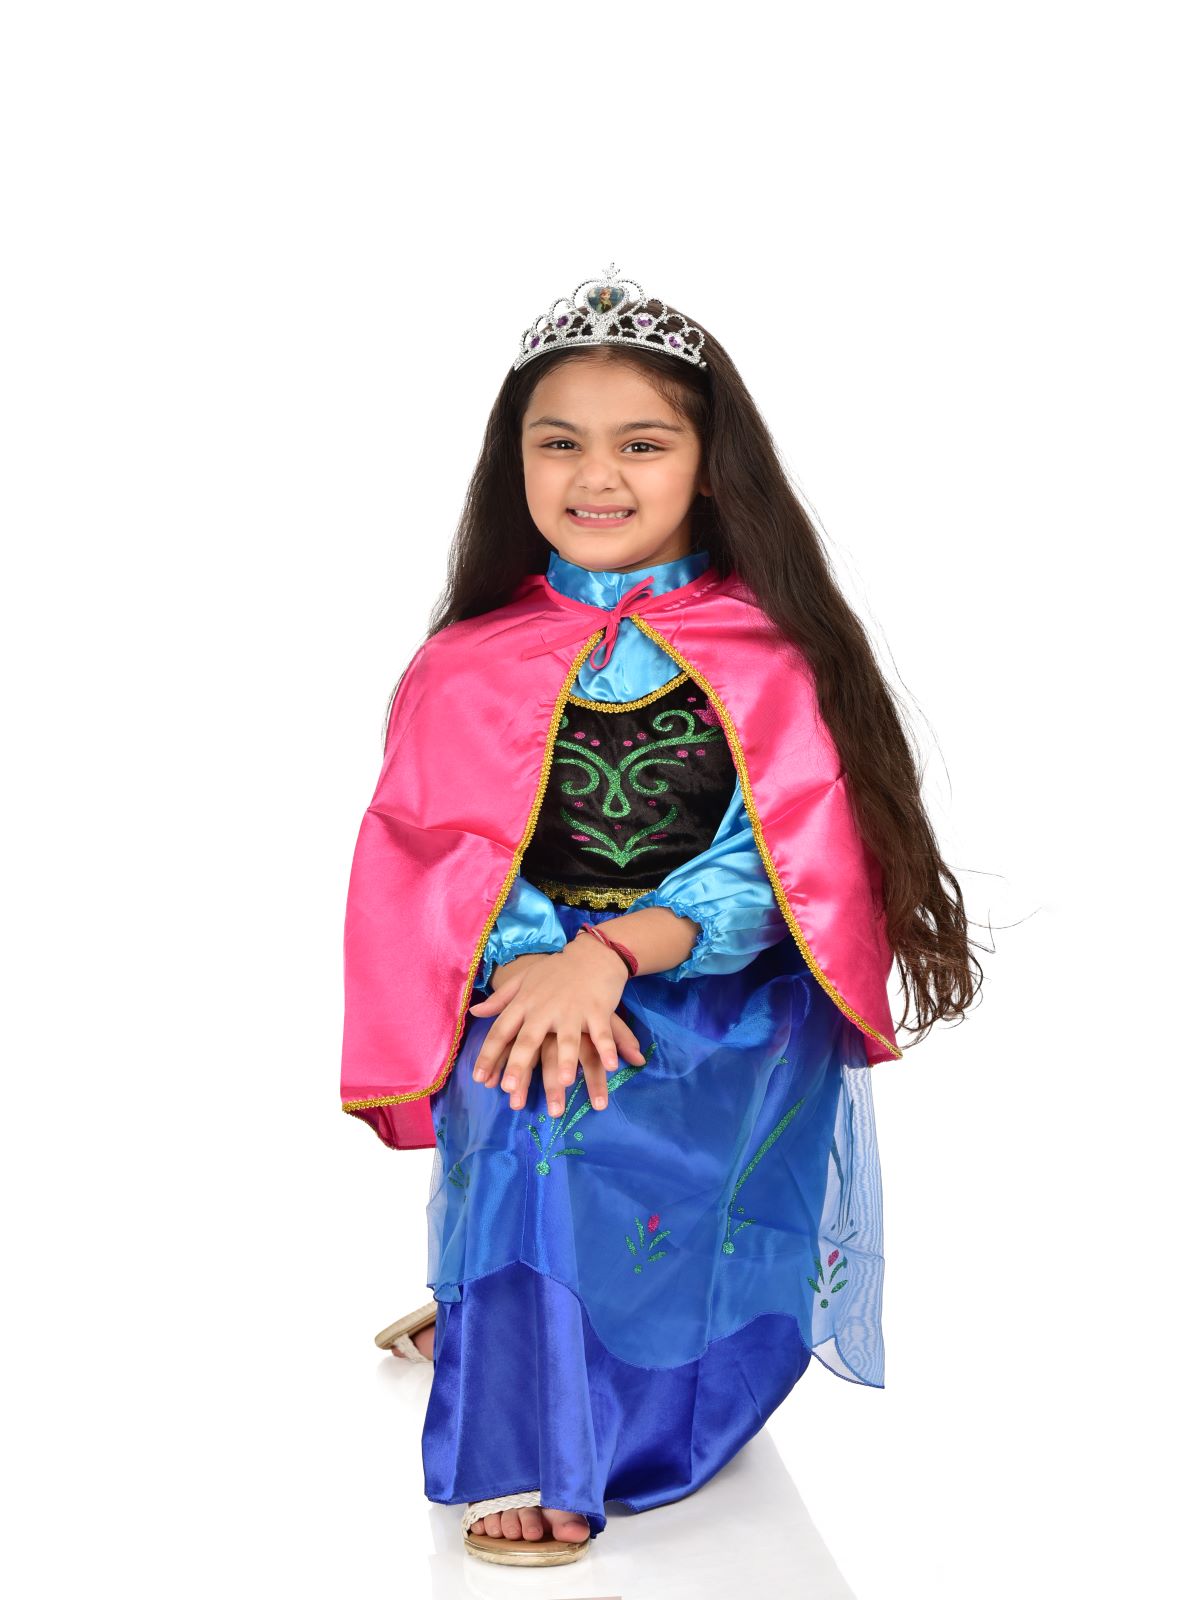 Oasis Princess Costume Costume Halloween Fancy Dress | eBay